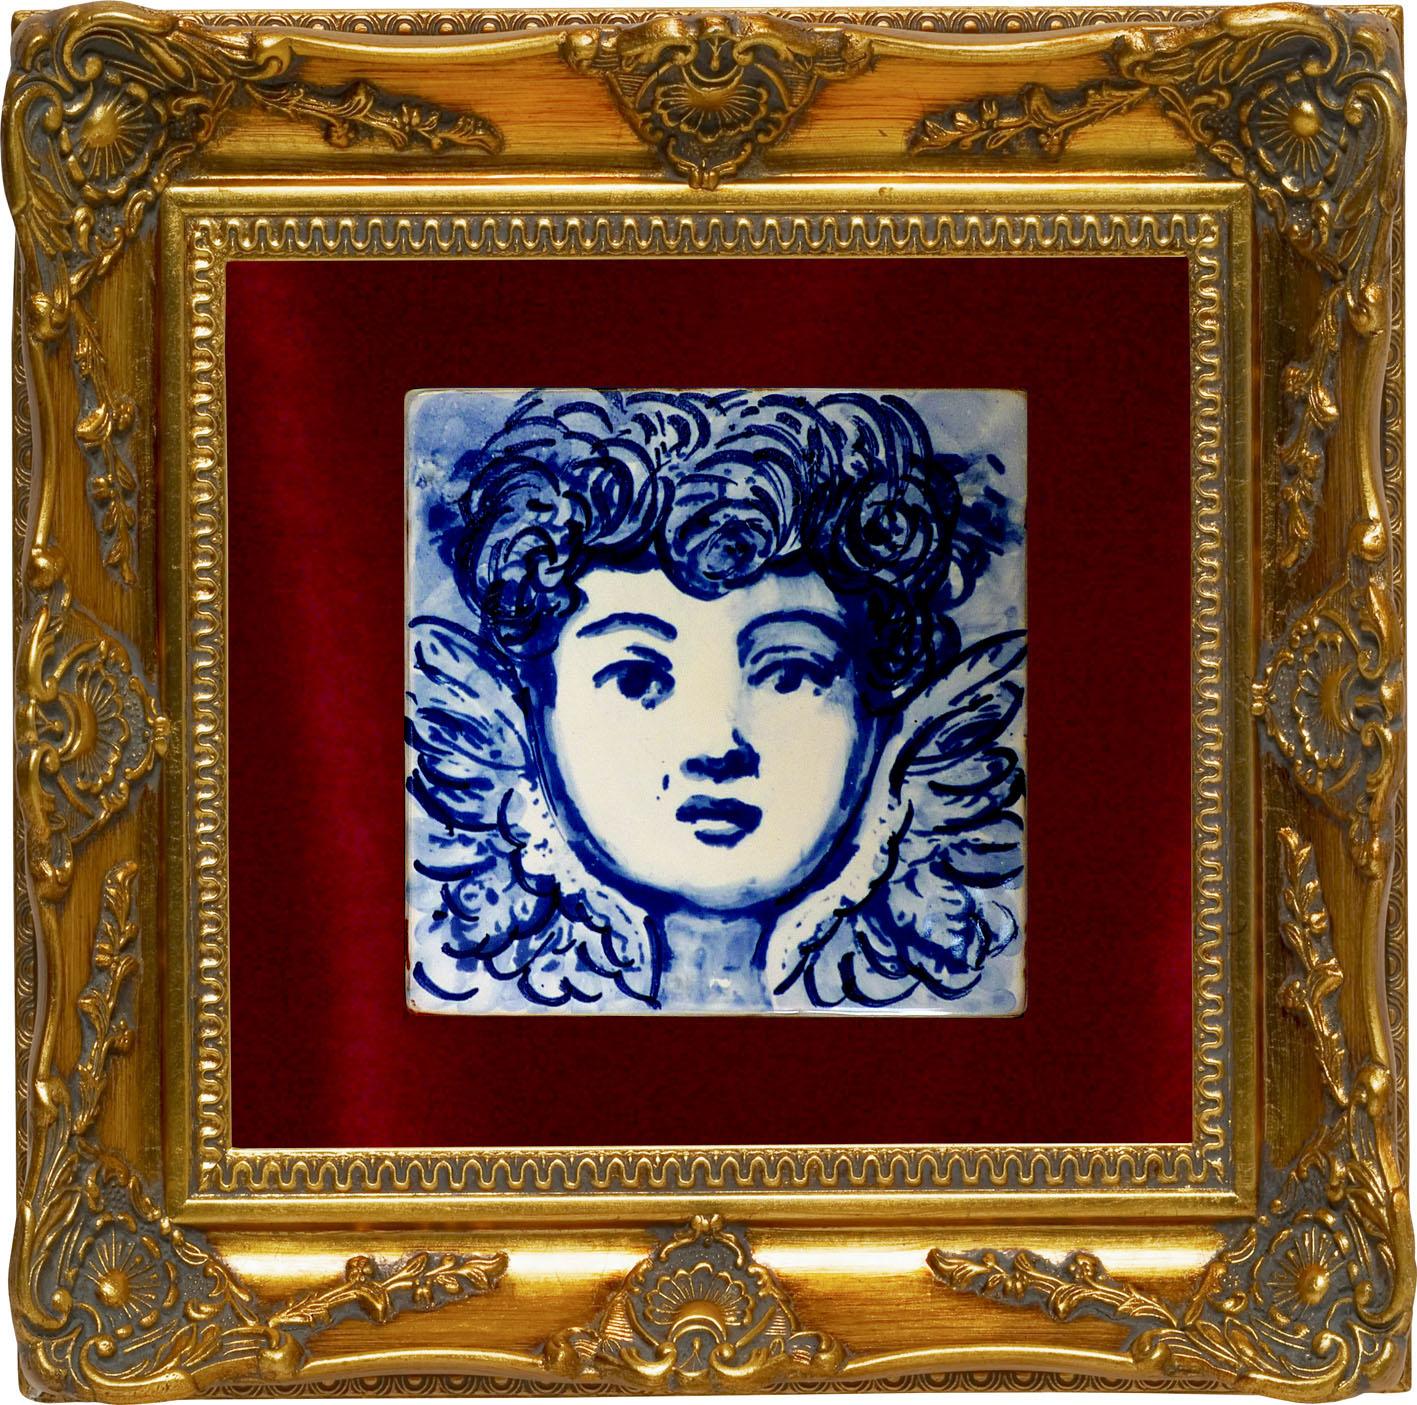 Glazed Blue Hand-Painted Baroque Cherub or Angel Portuguese Ceramic Tile or Azulejo